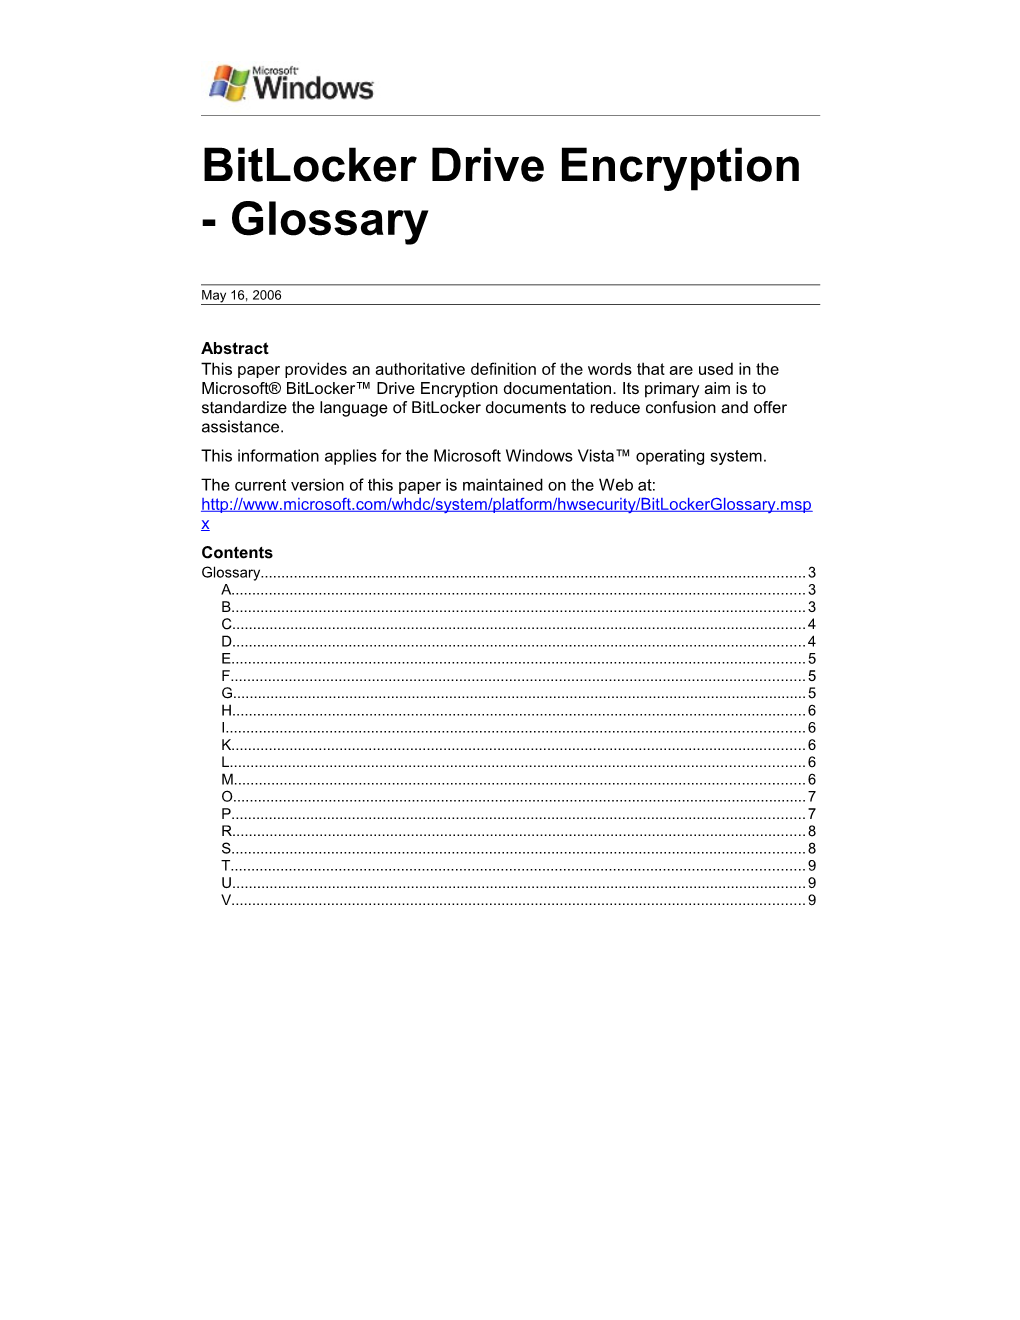 Bitlocker Drive Encryption: Glossary